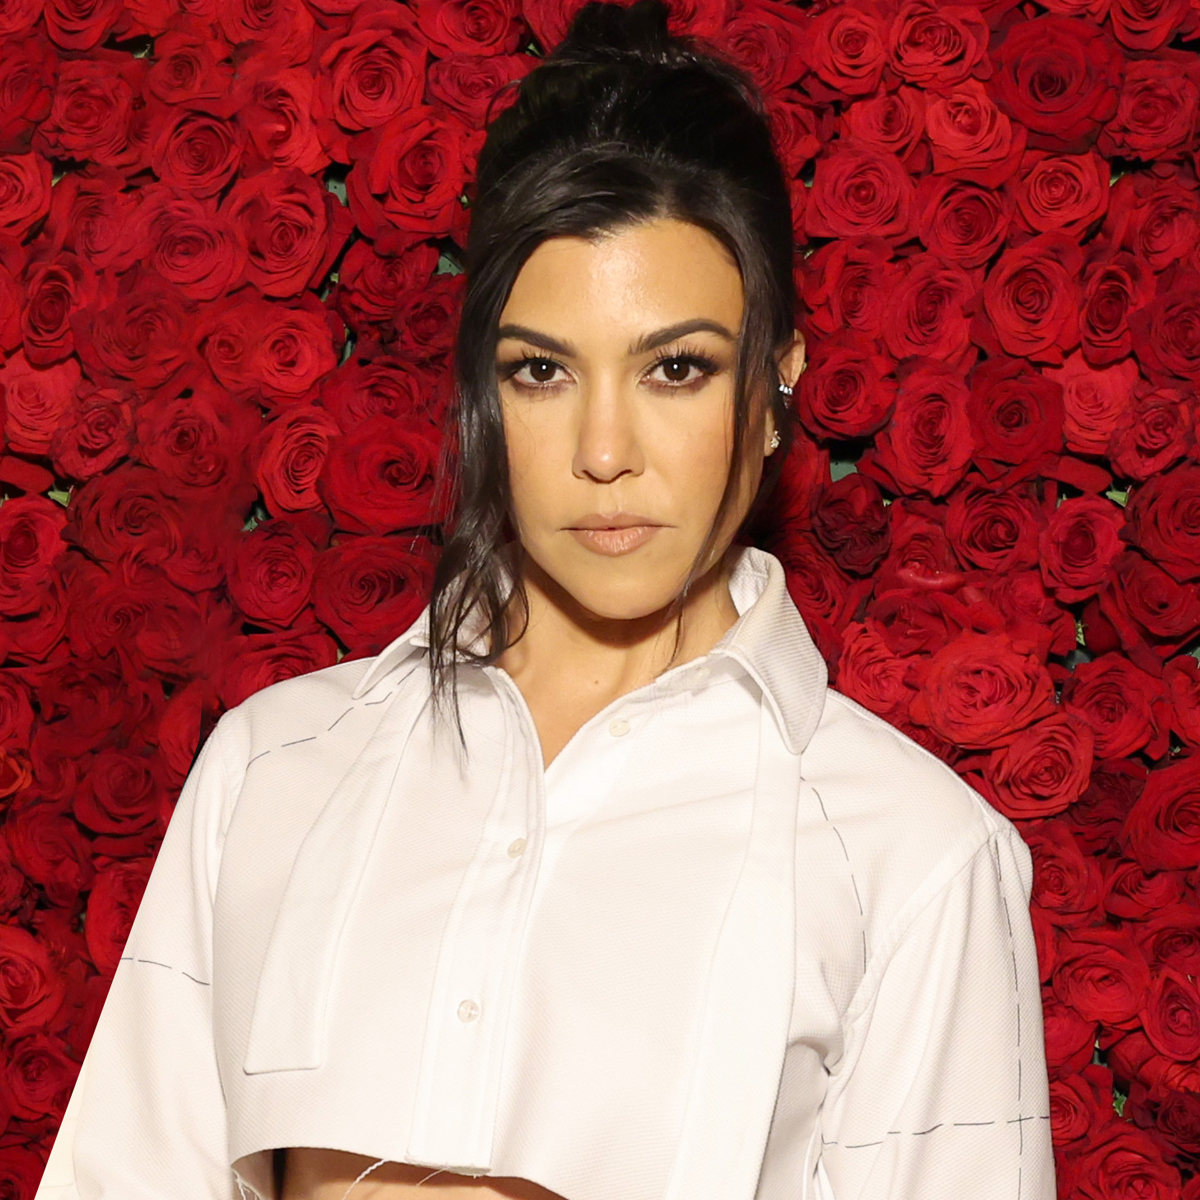 Kourtney Kardashian Responds to Comments About Her “Nasty” Bathroom